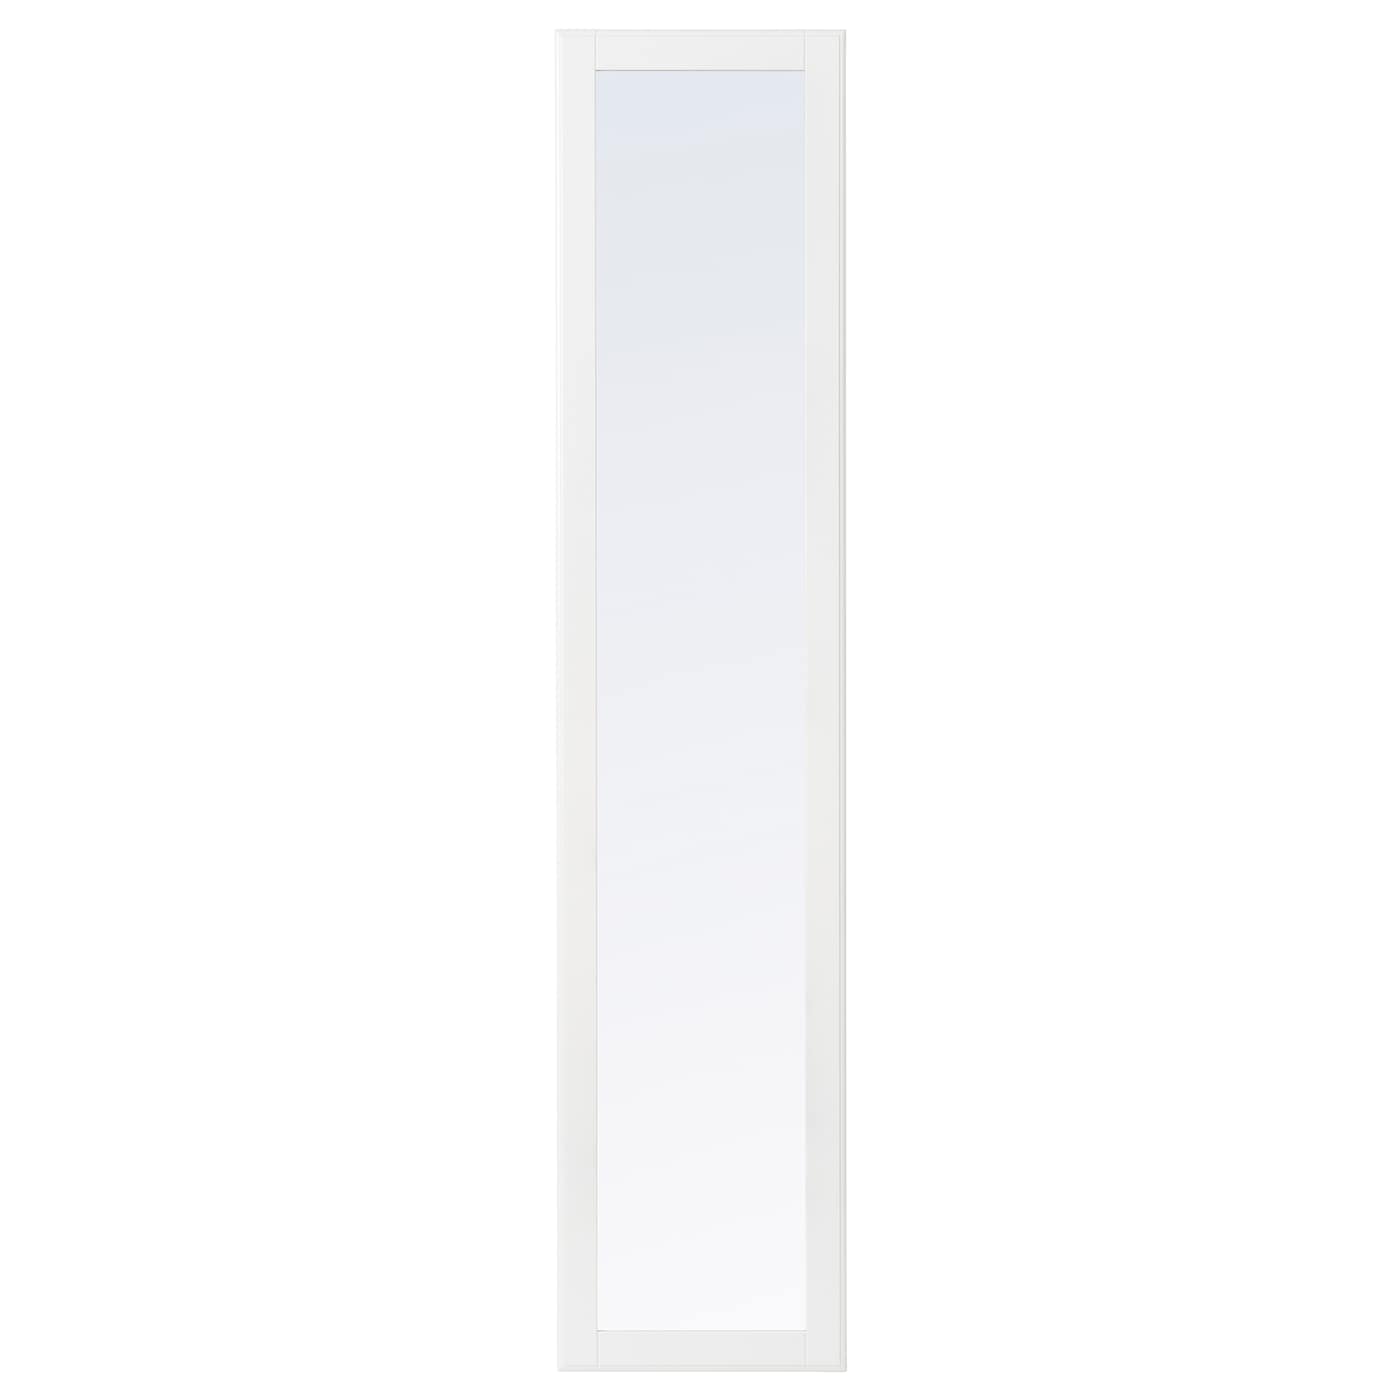 Дверь шкафа - TYSSEDAL IKEA/ ТИССЕДАЛЬ ИКЕА, 50x195 см, прозрачный